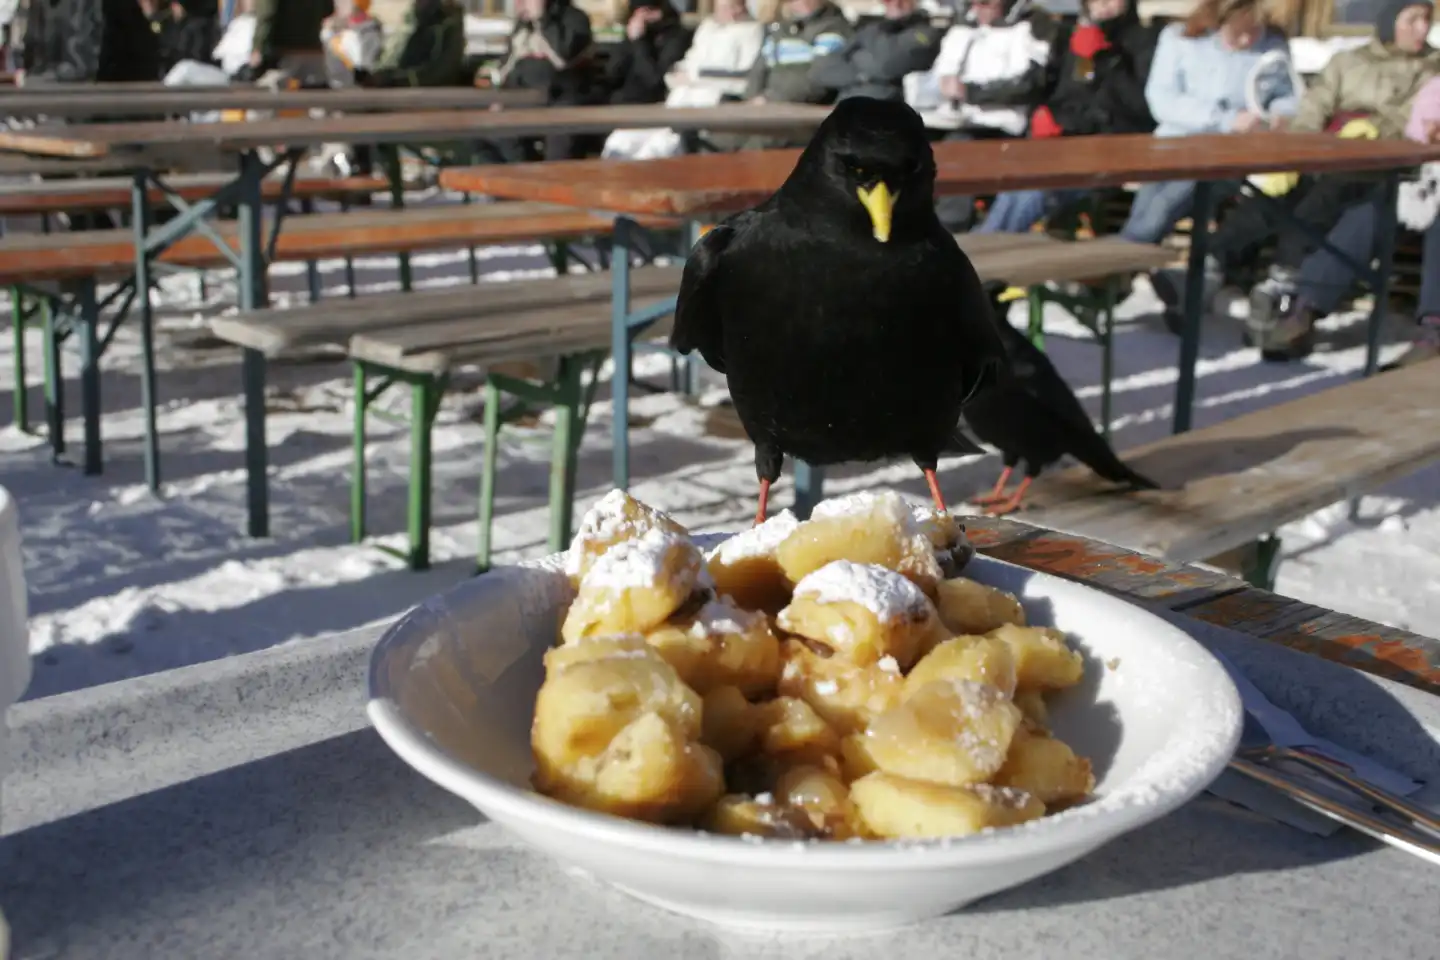 Black Bird eating Cut-up and sugared Pancake with Raisins